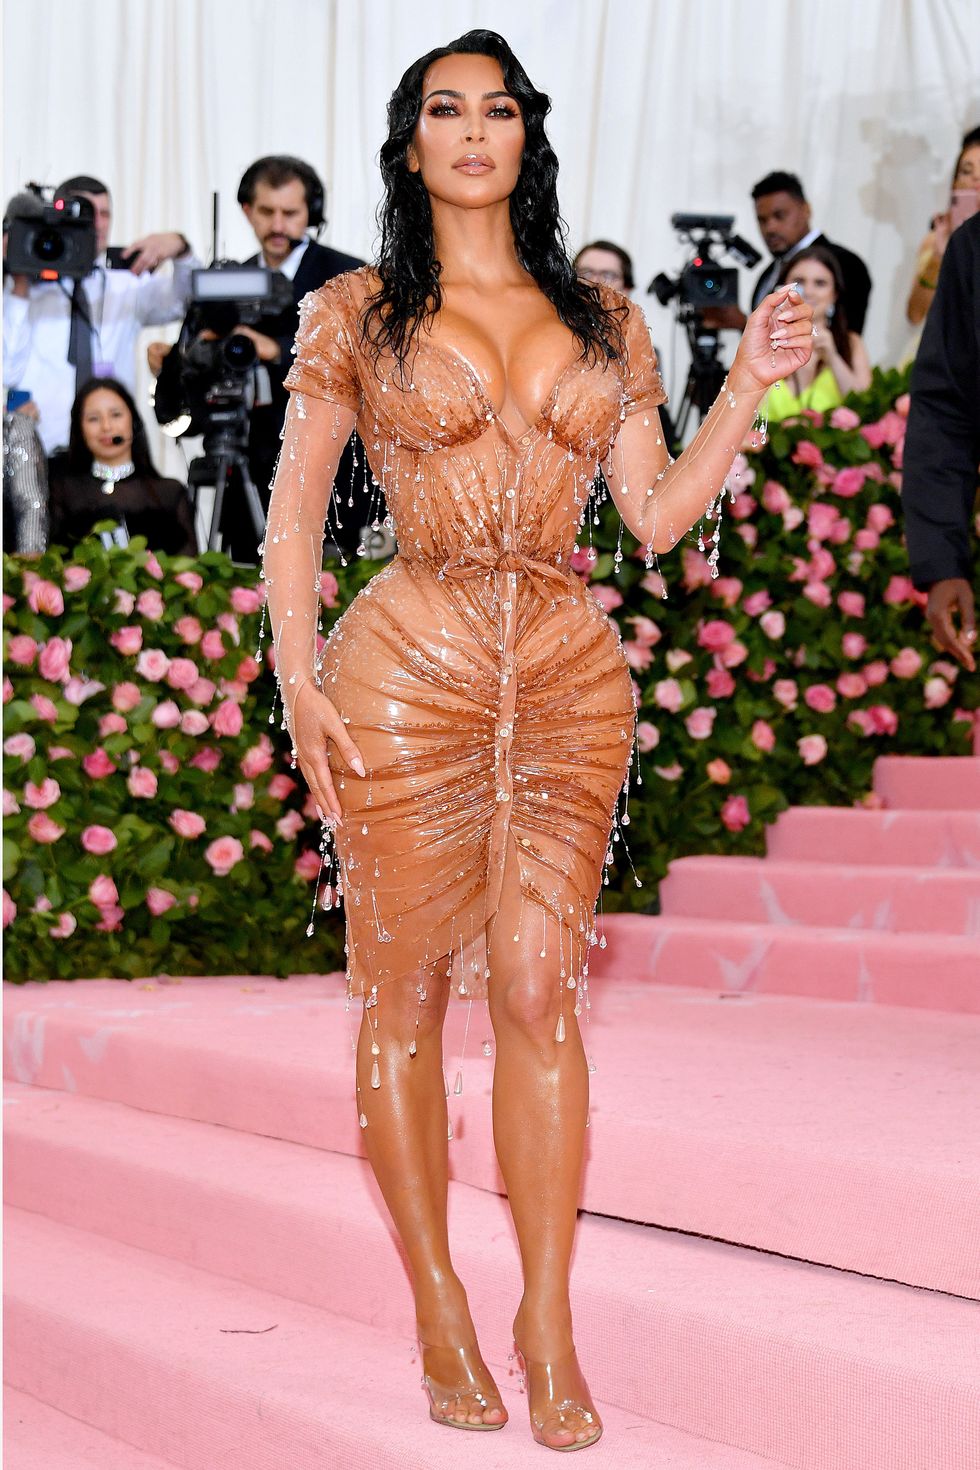 The Kim Kardashian "Met Gala" Dress This dress was worn by Kim